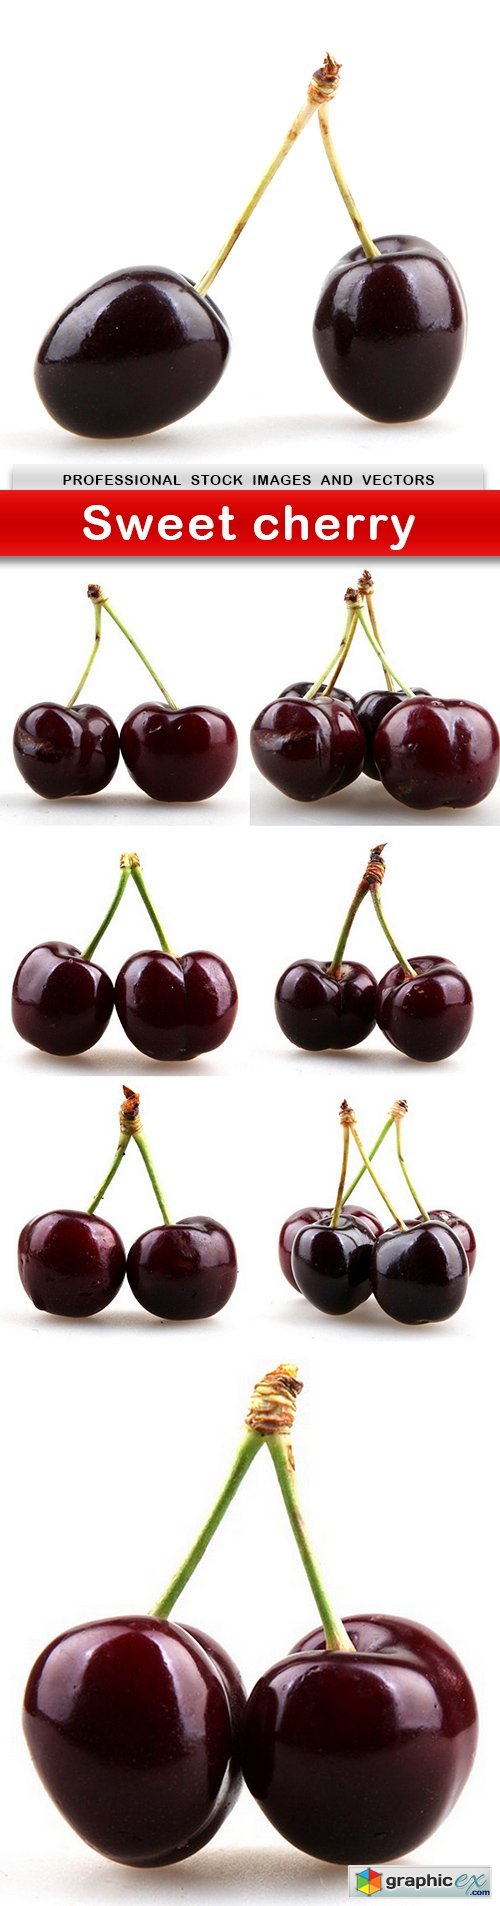 Sweet cherry - 8 UHQ JPEG